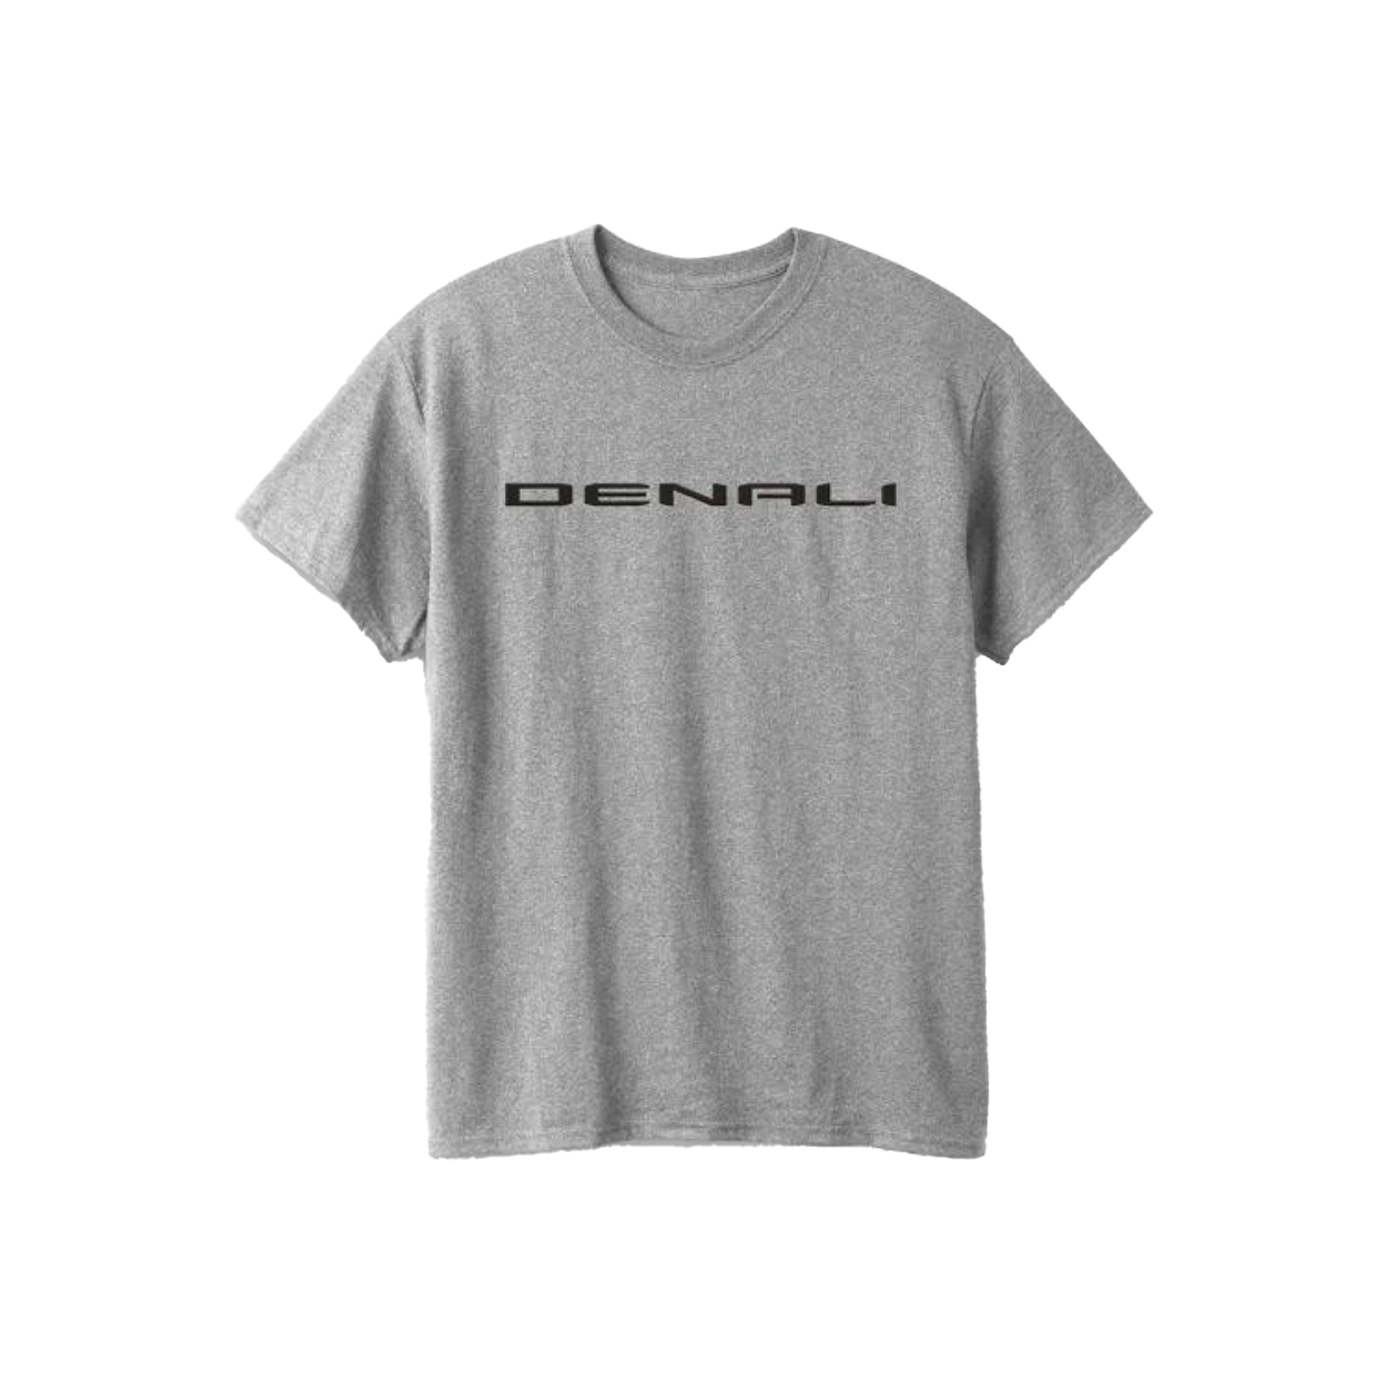 Denali T-shirt *Made In The USA